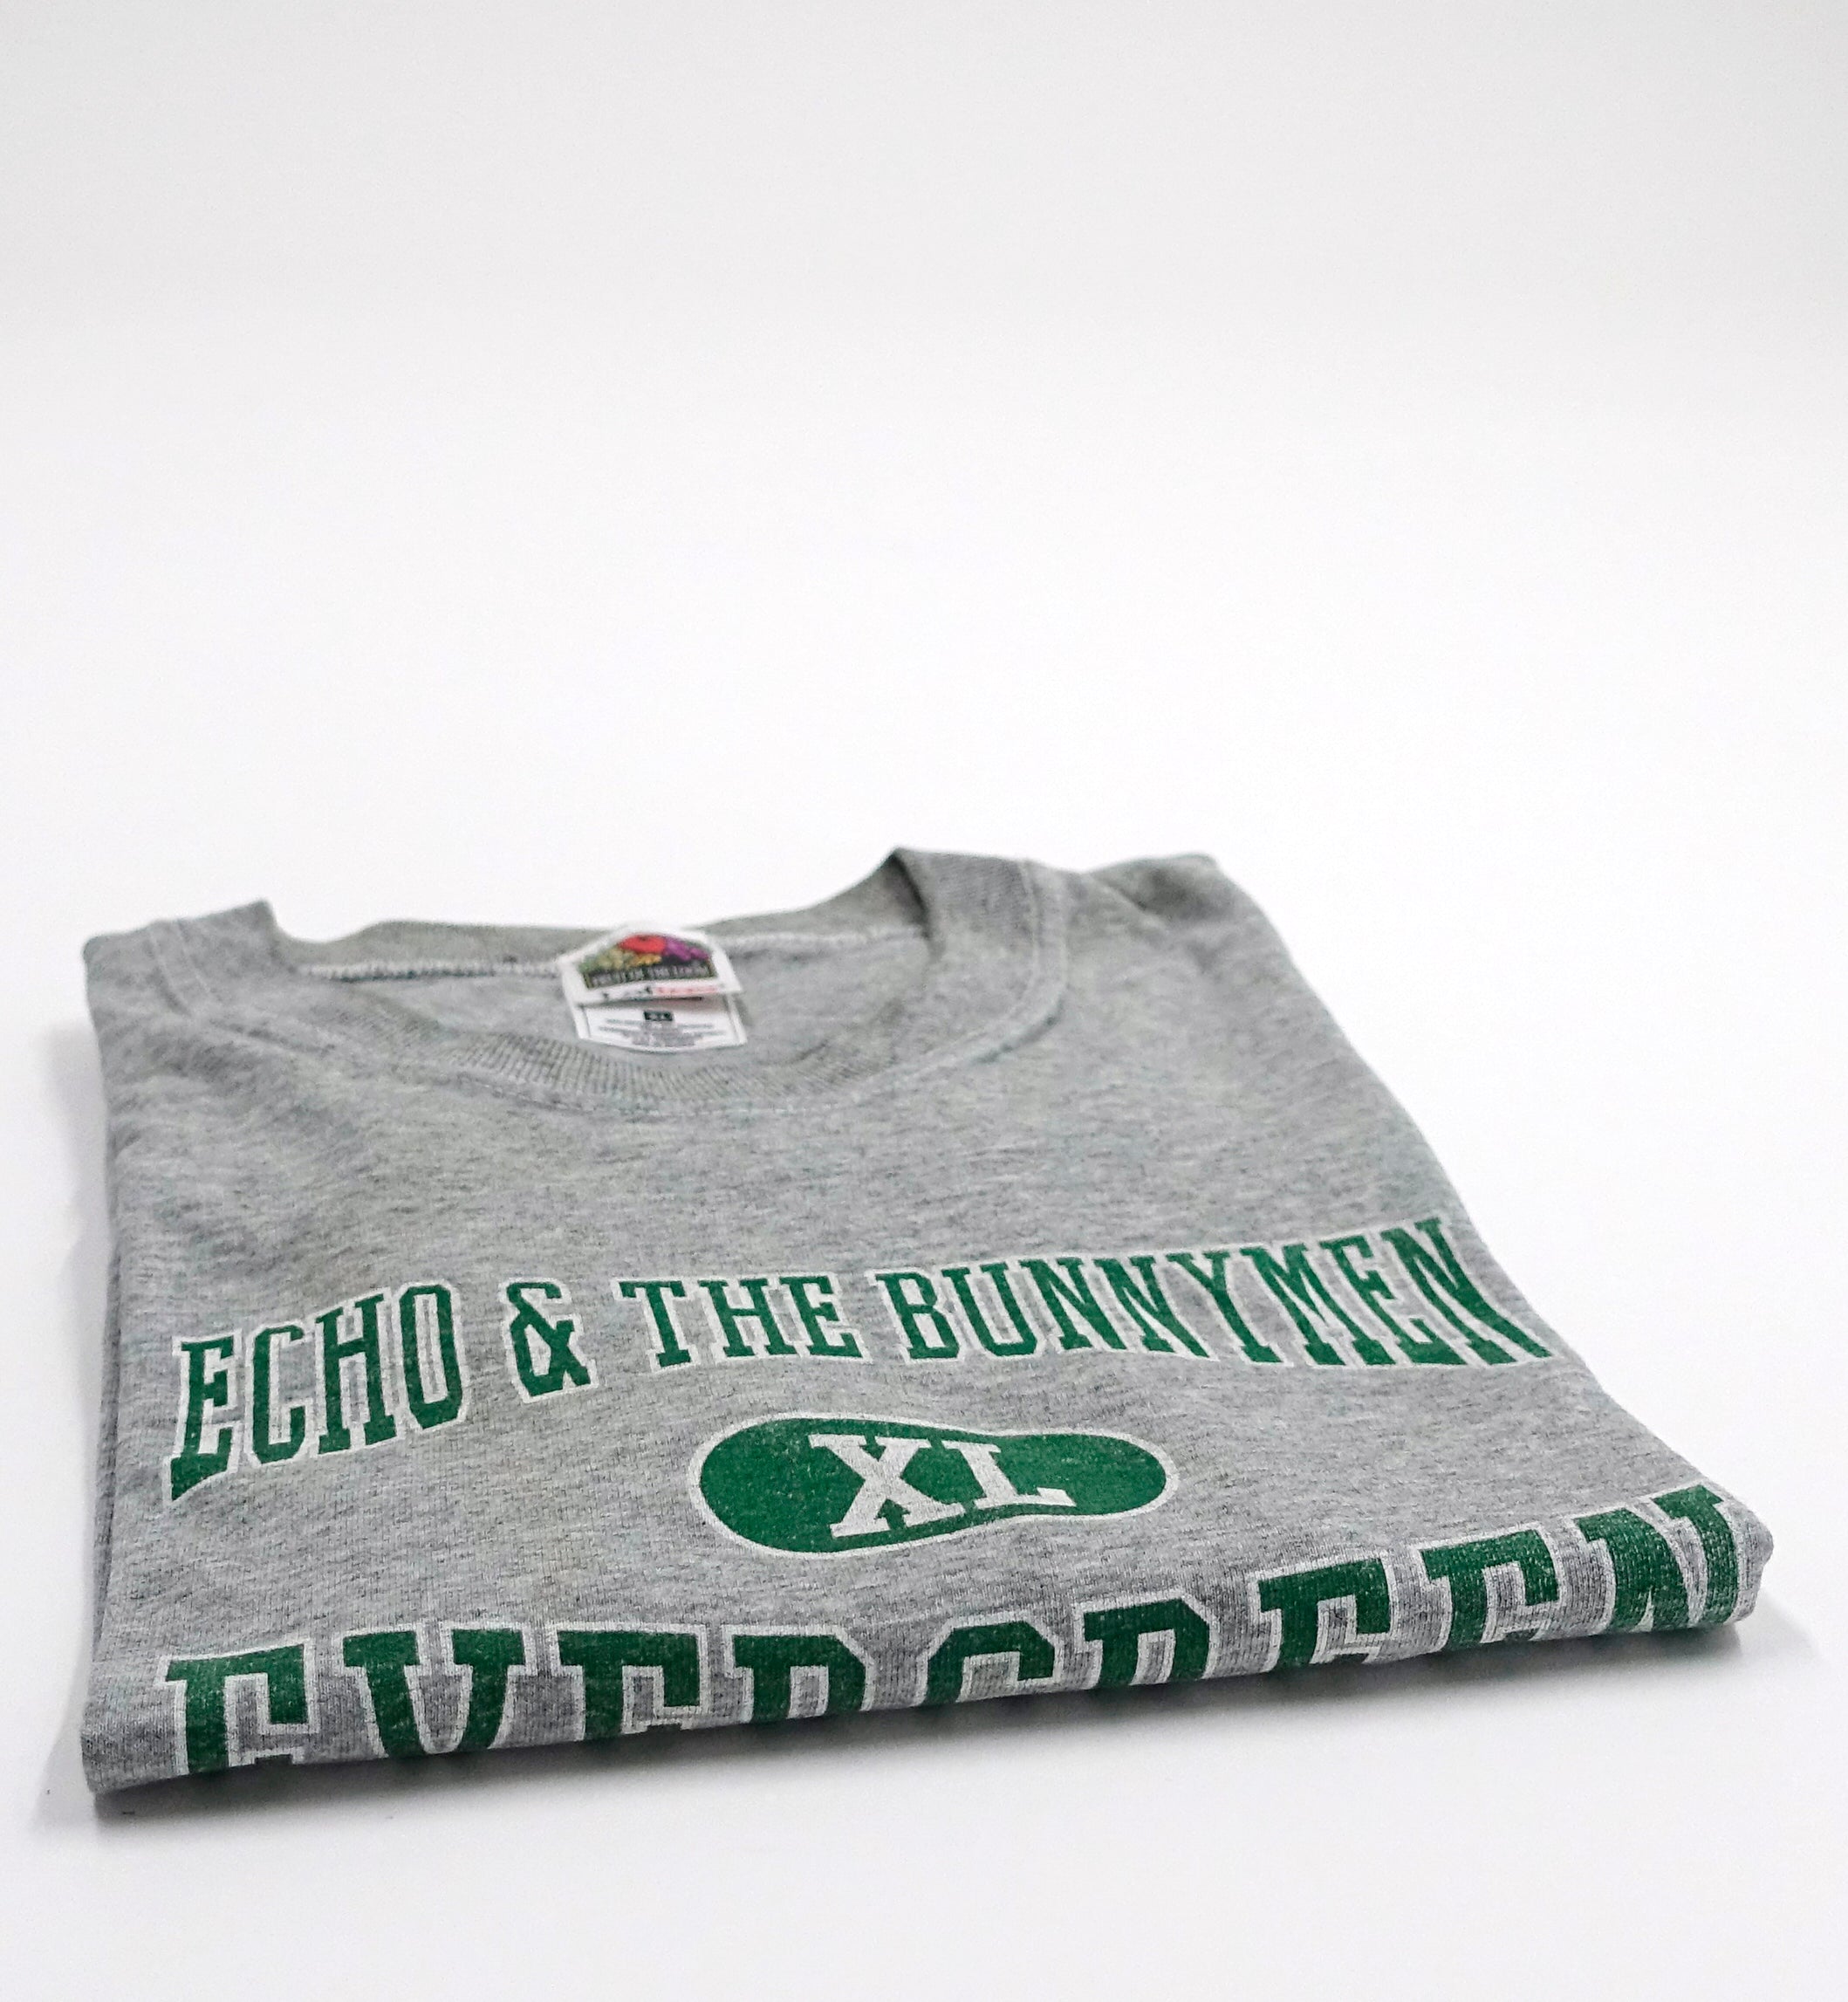 Echo & The Bunnymen - Evergreen 1997 Tour Shirt Size XL